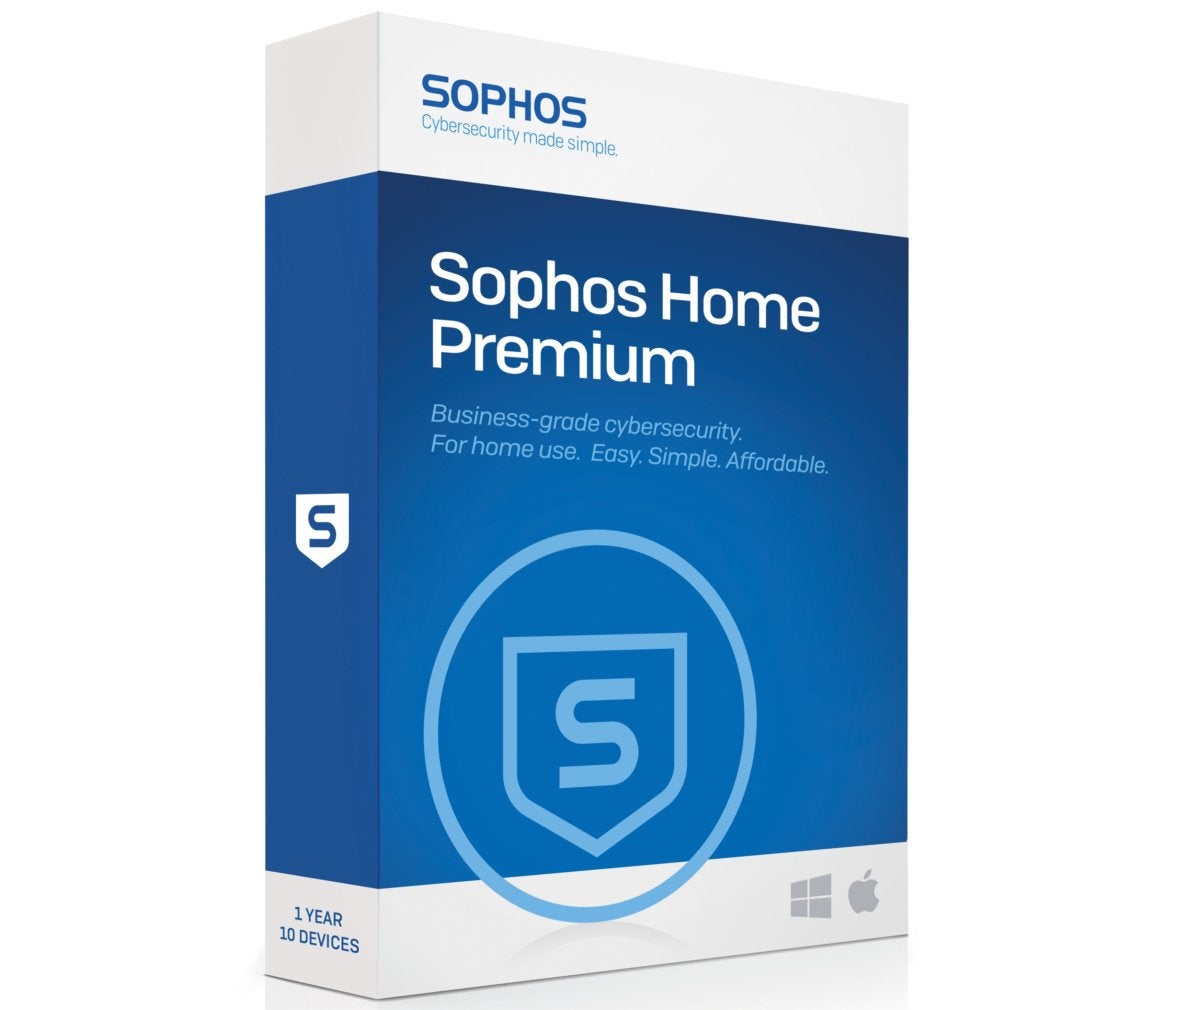 sophos home premium review